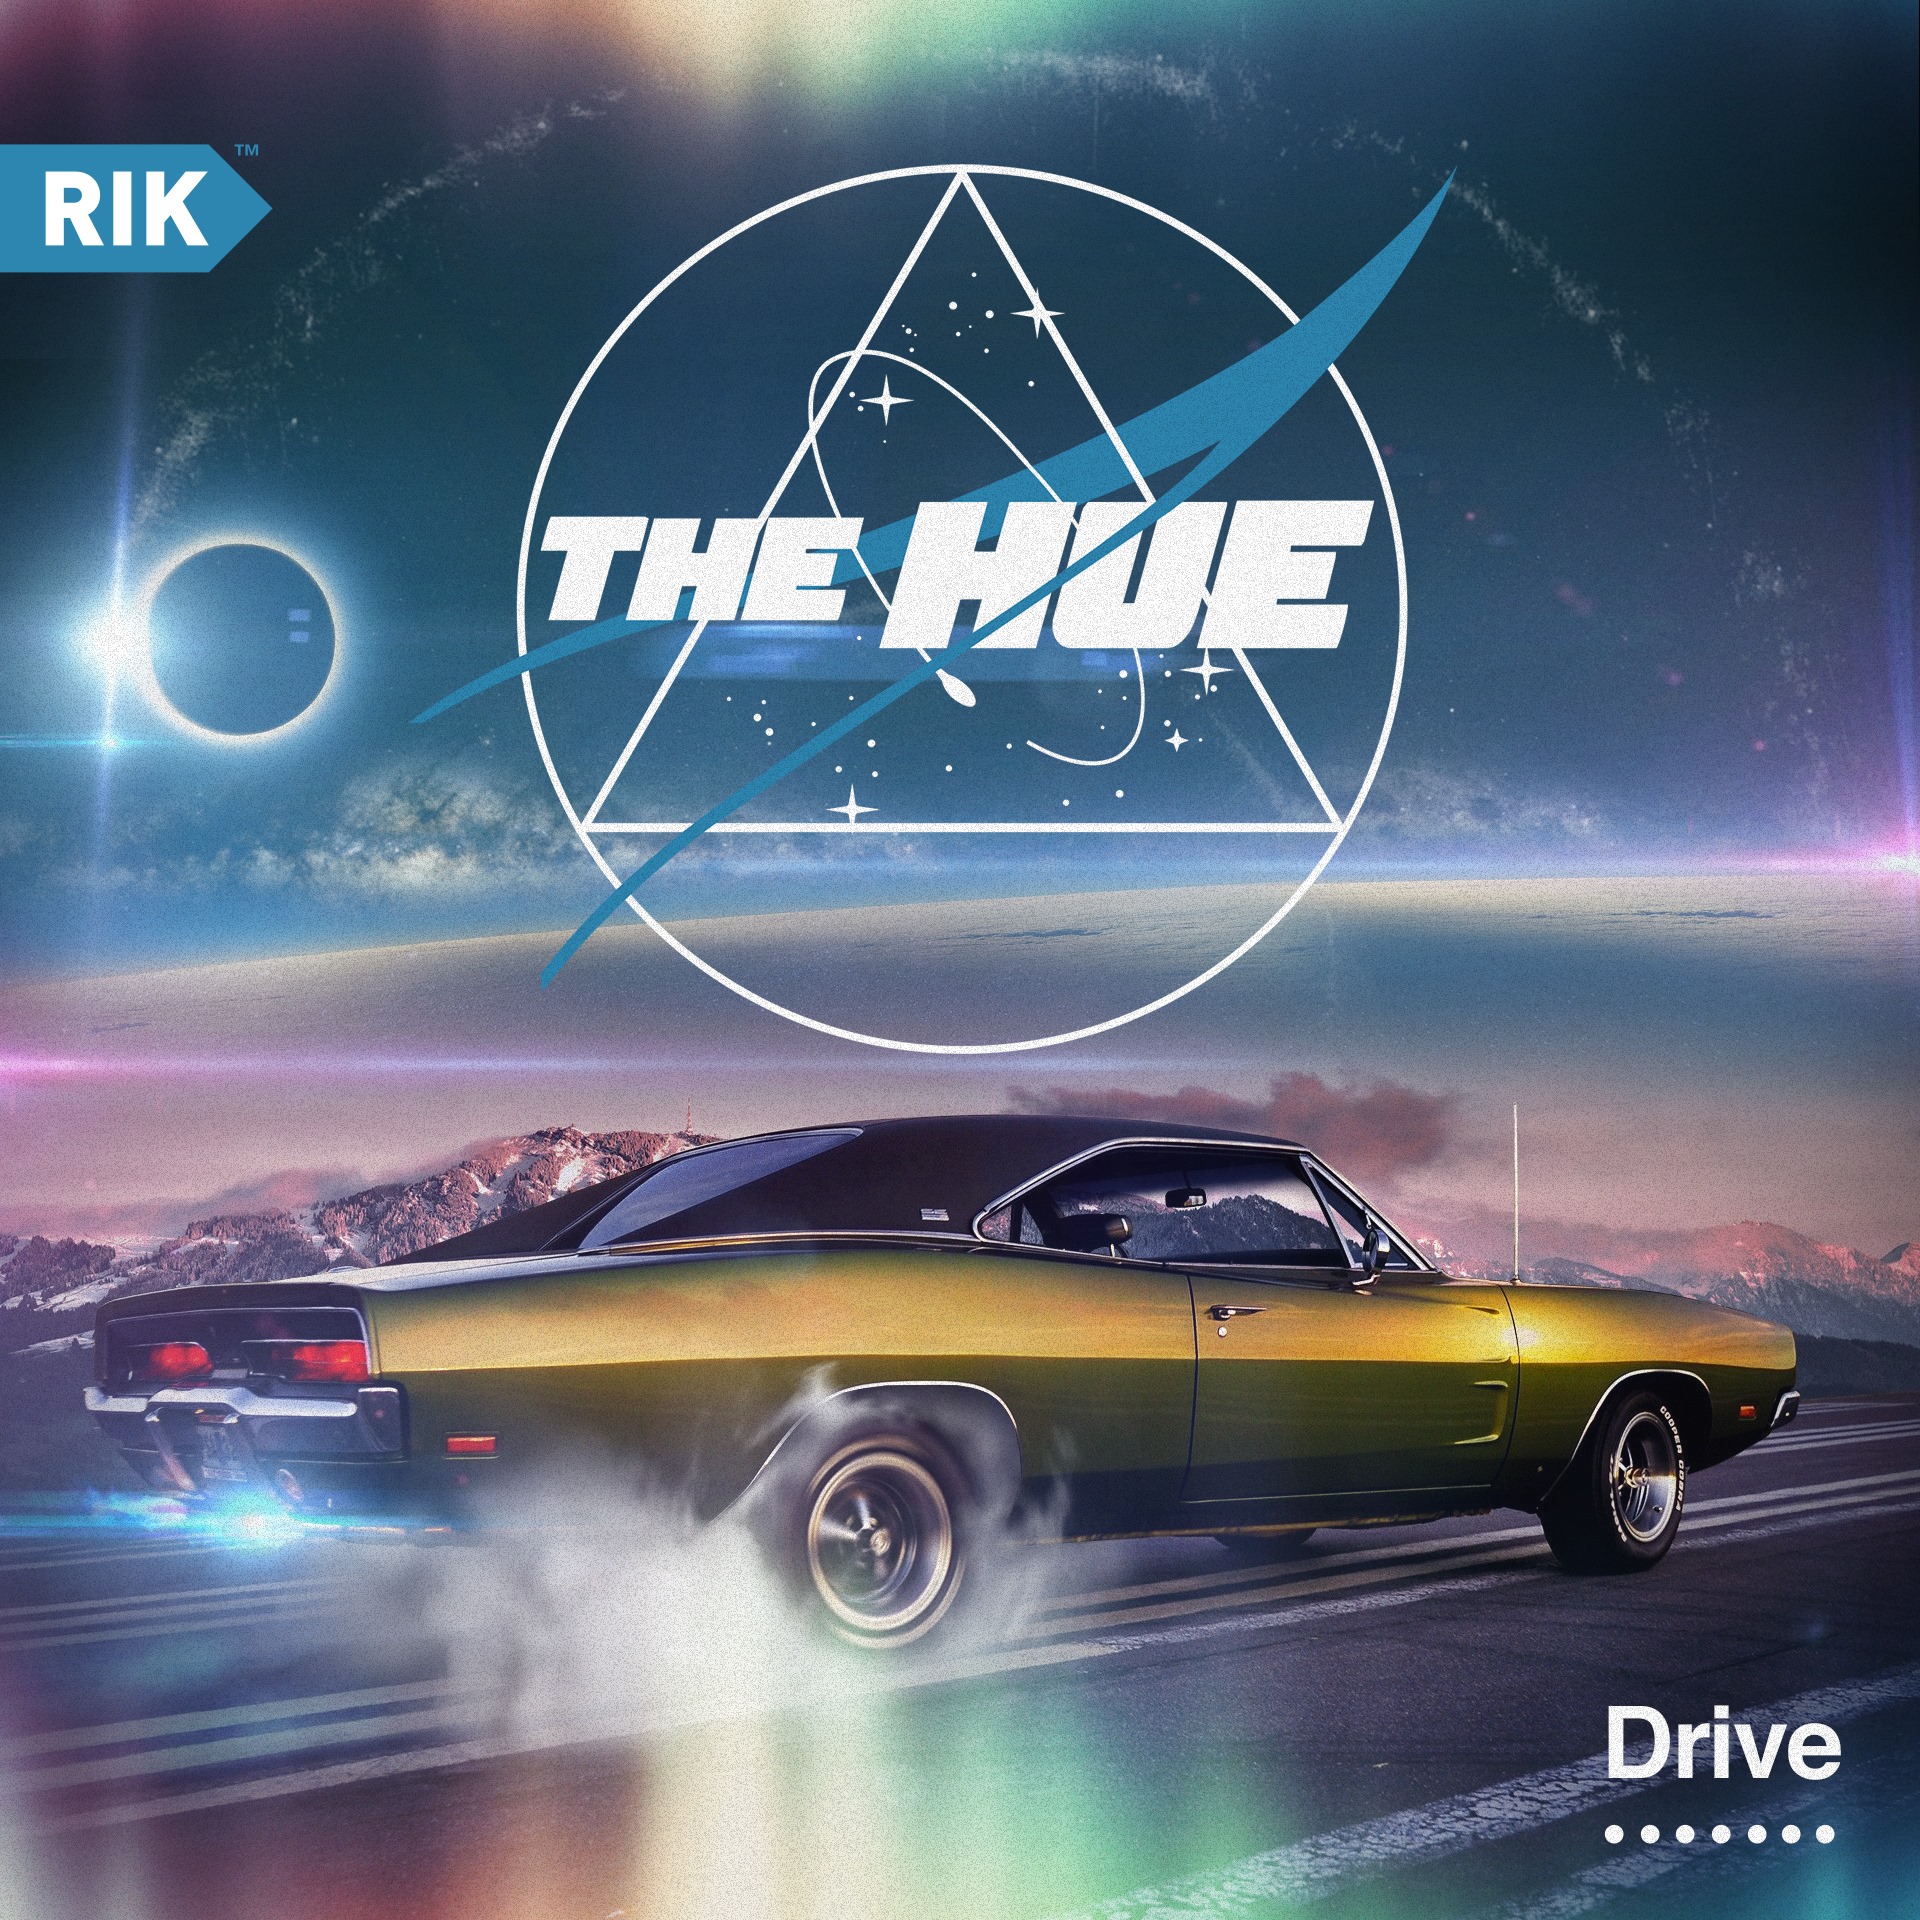 The Hue — “Drive”